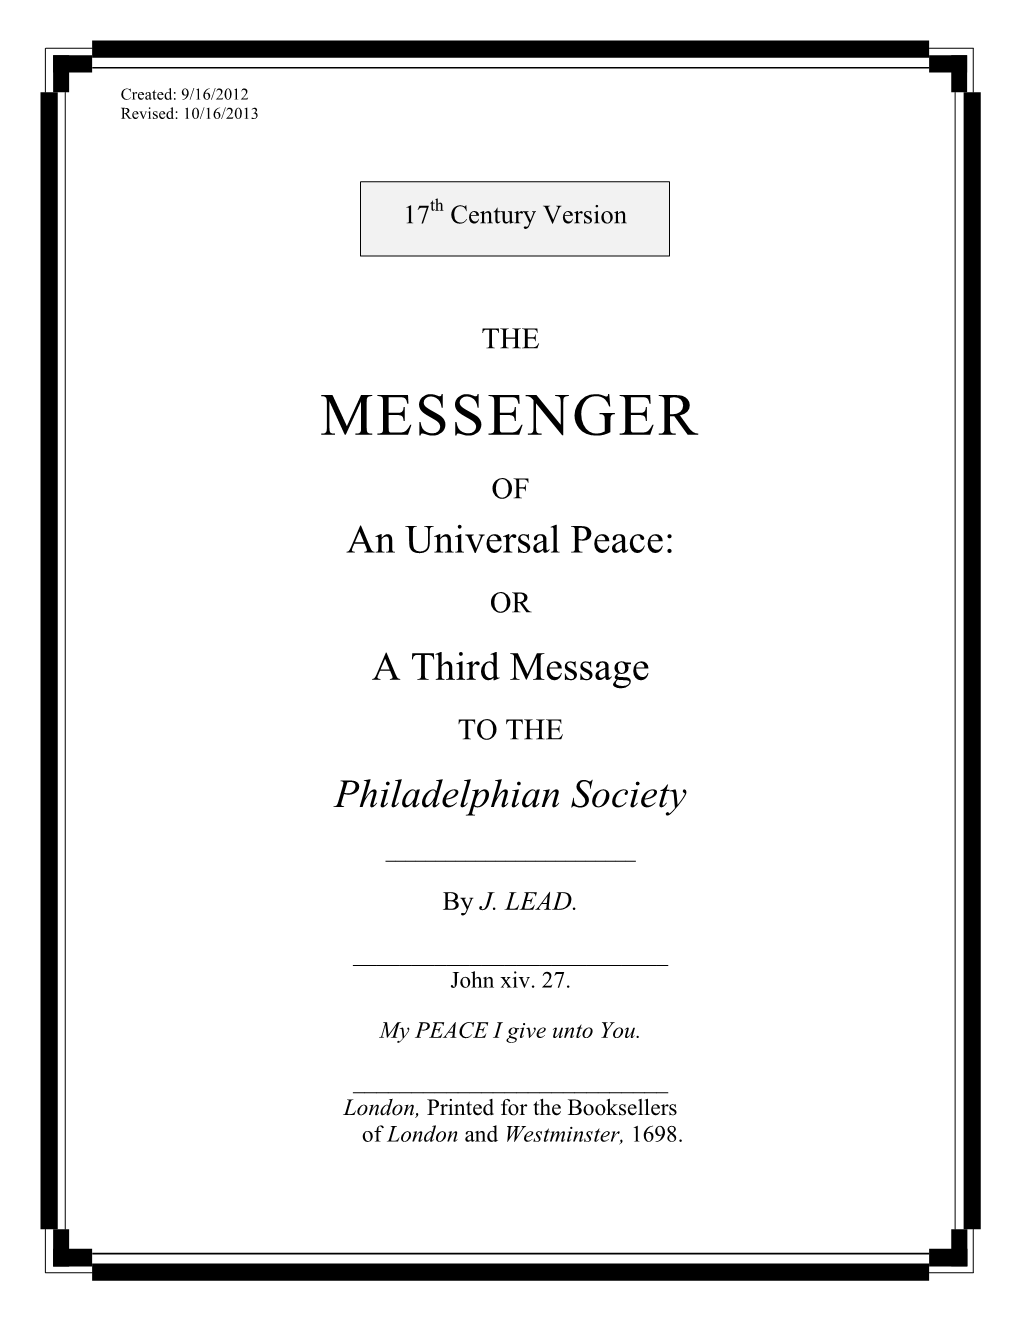 Third Message to the Philadelphian Society